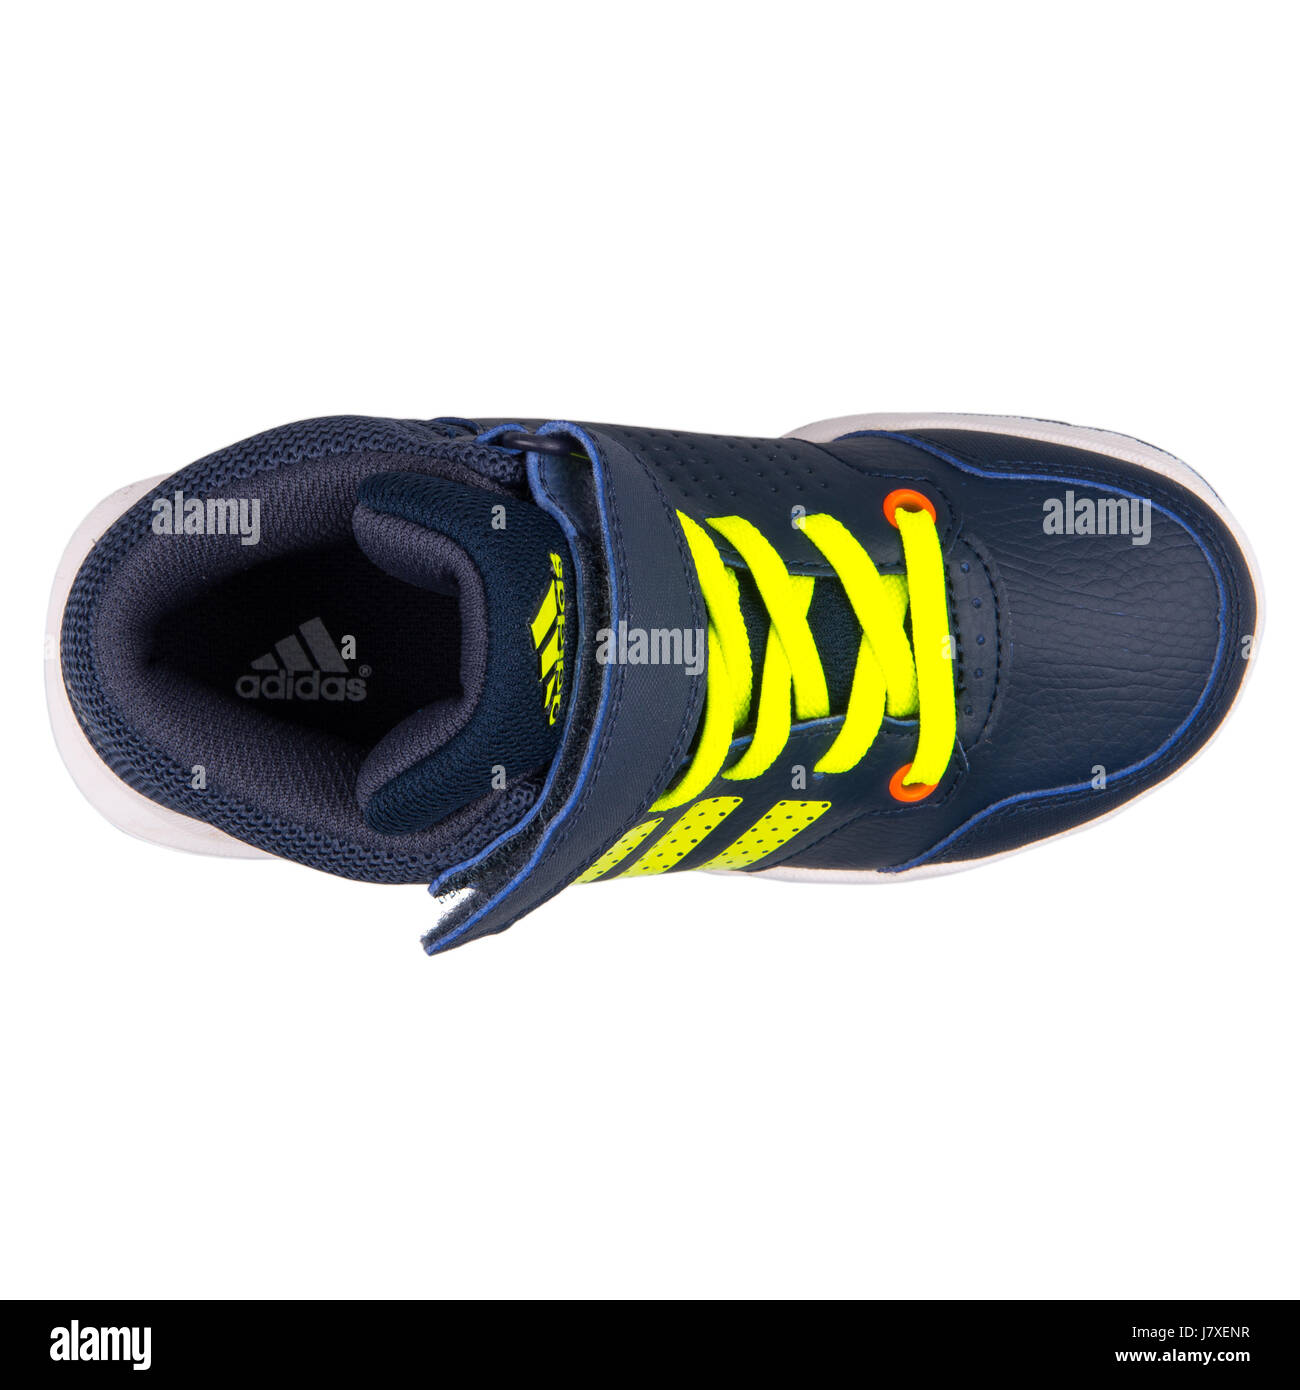 Adidas Jan BS 2 mid C Kids Blue Sneakers - B23907 Stock Photo - Alamy